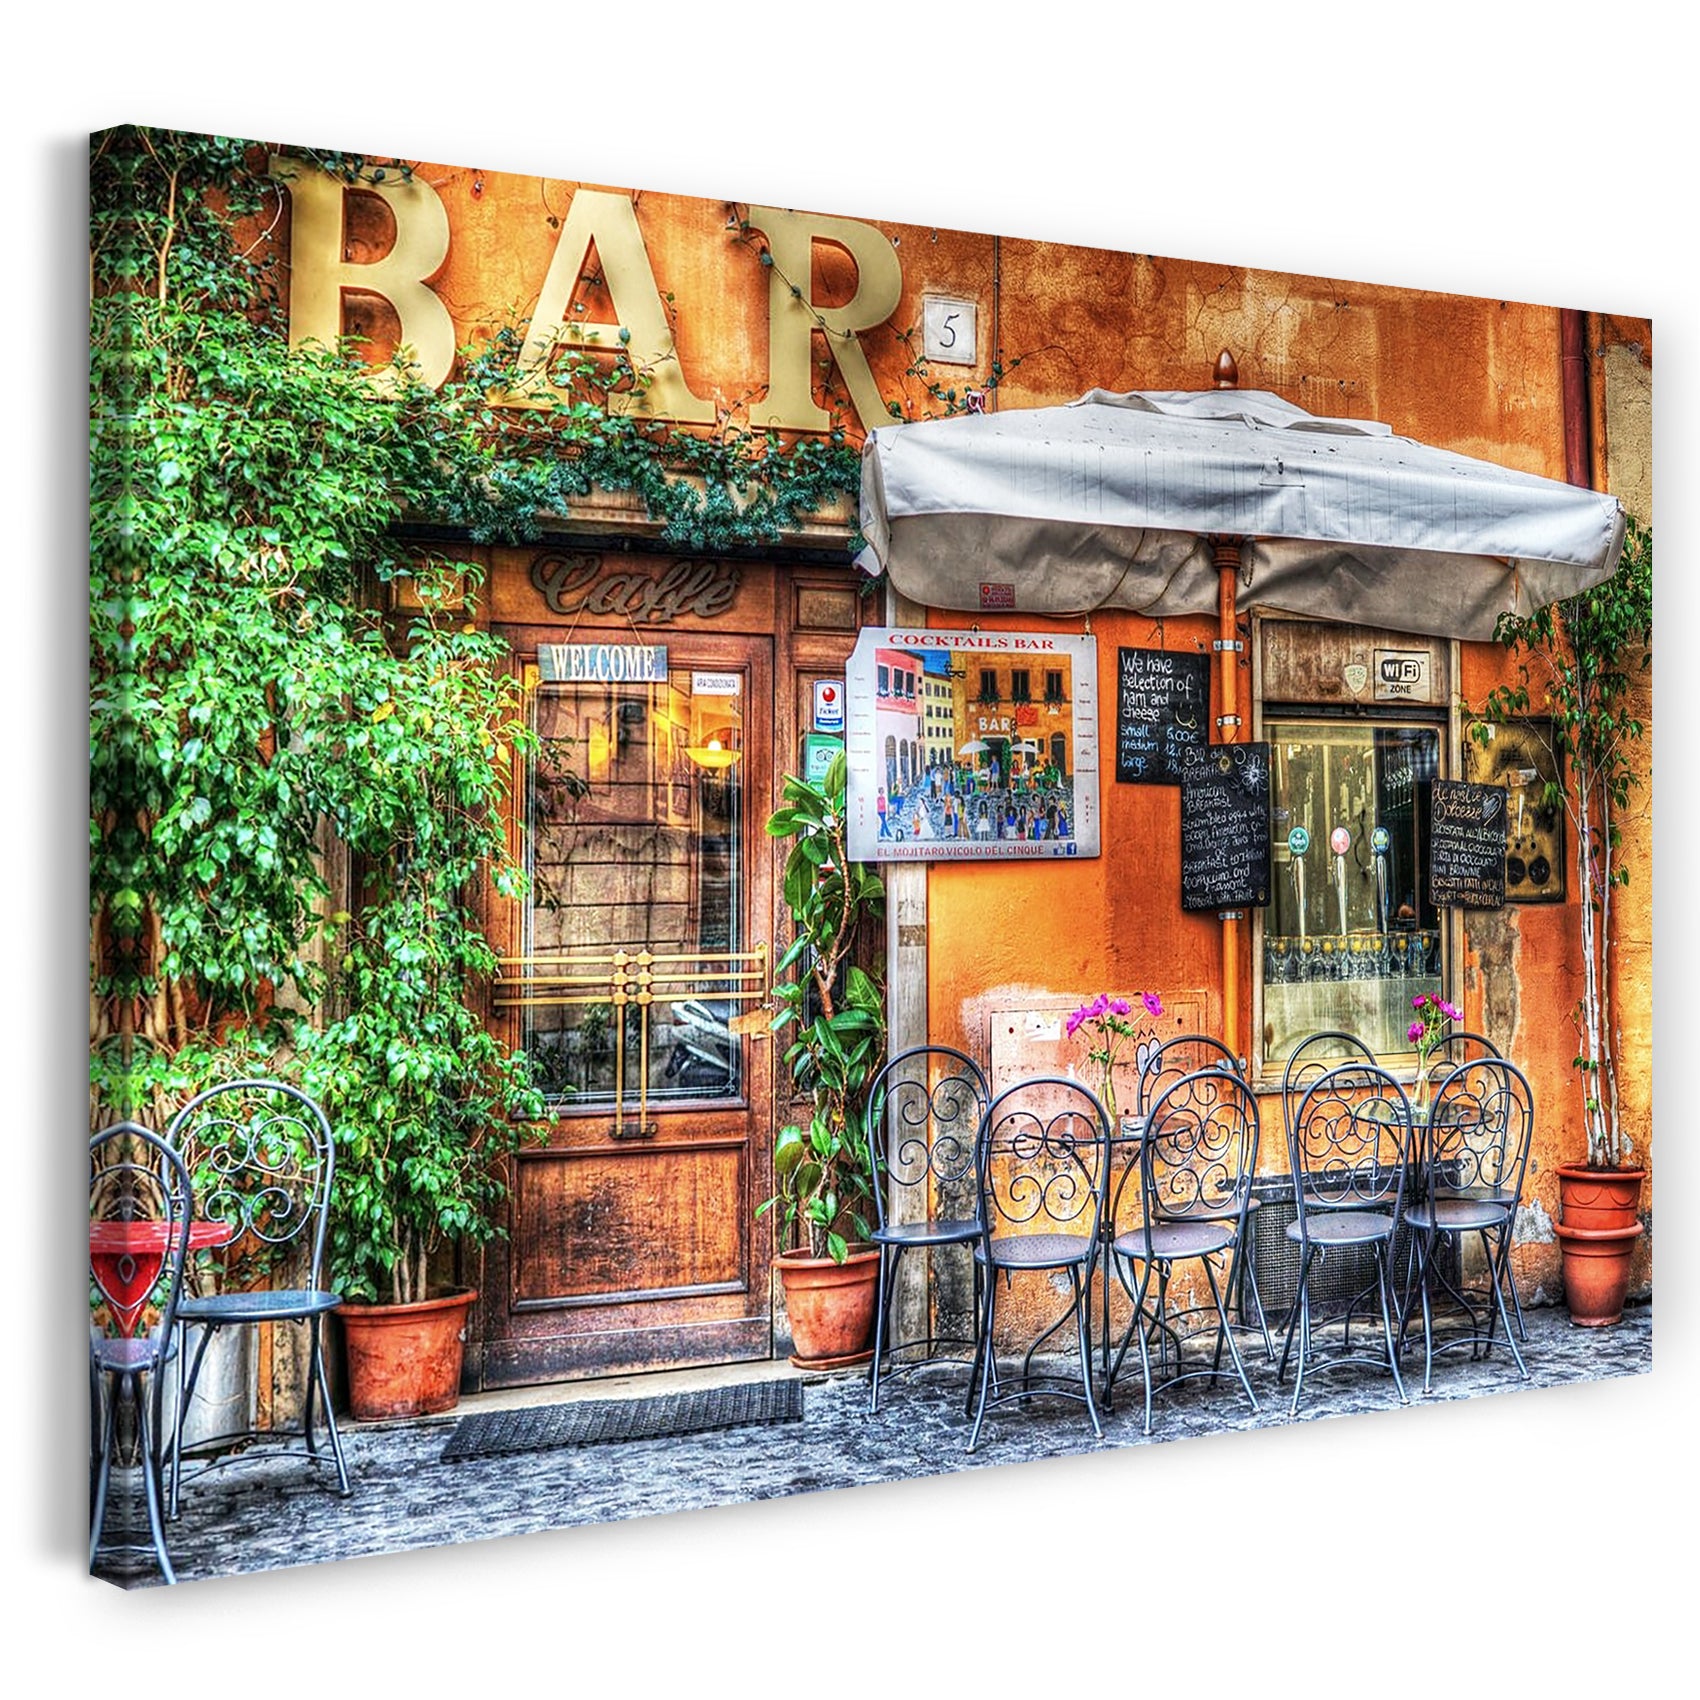 Leinwandbild Bar mit bunter Fassade und Mittelmeer-Feeling